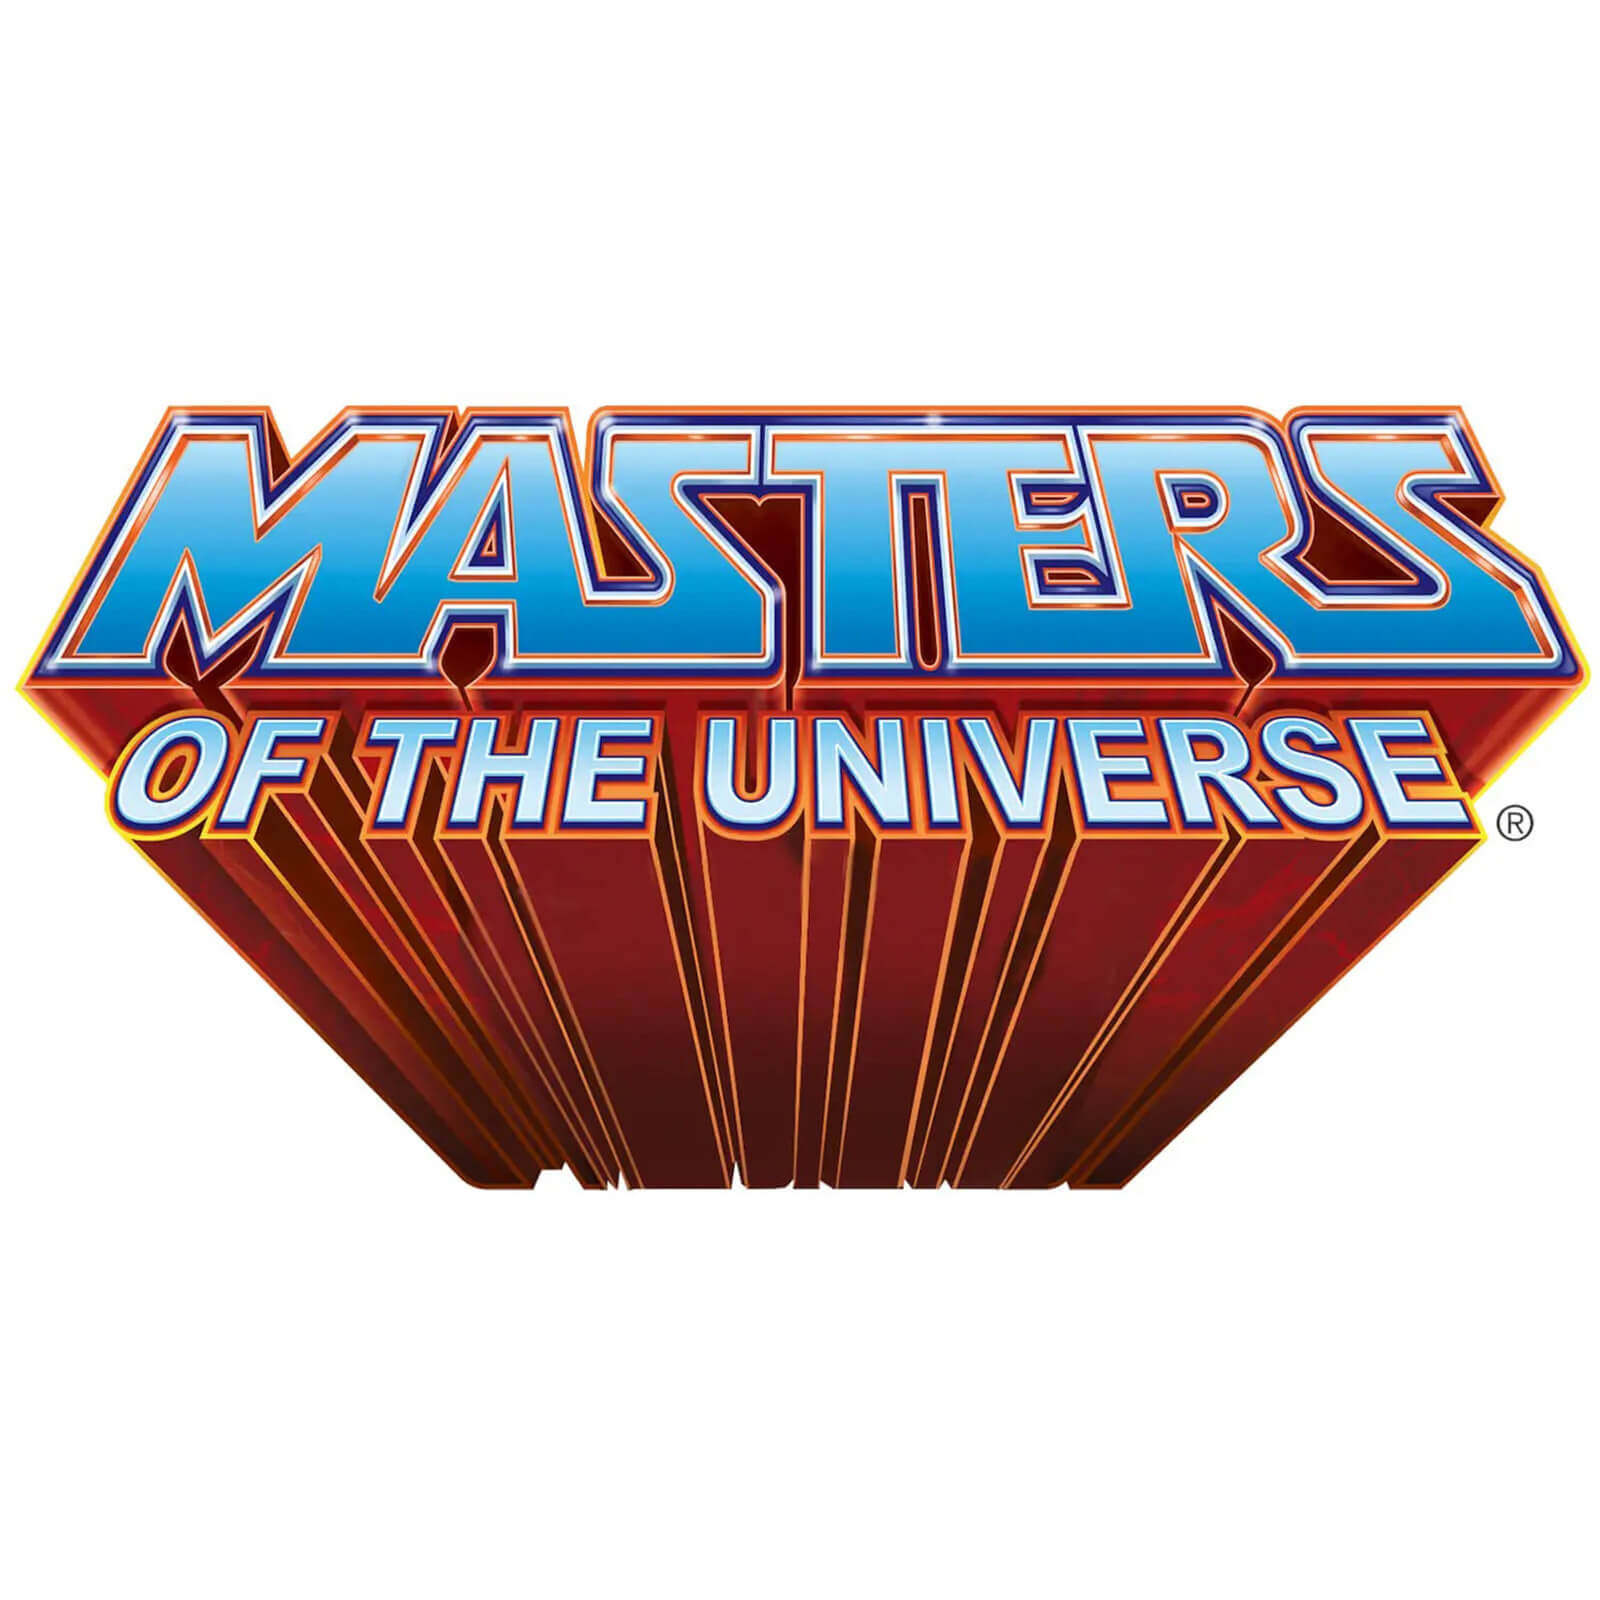 Mattel Masters of the Universe: Revelation Masterverse Action Figure - Scare Glow